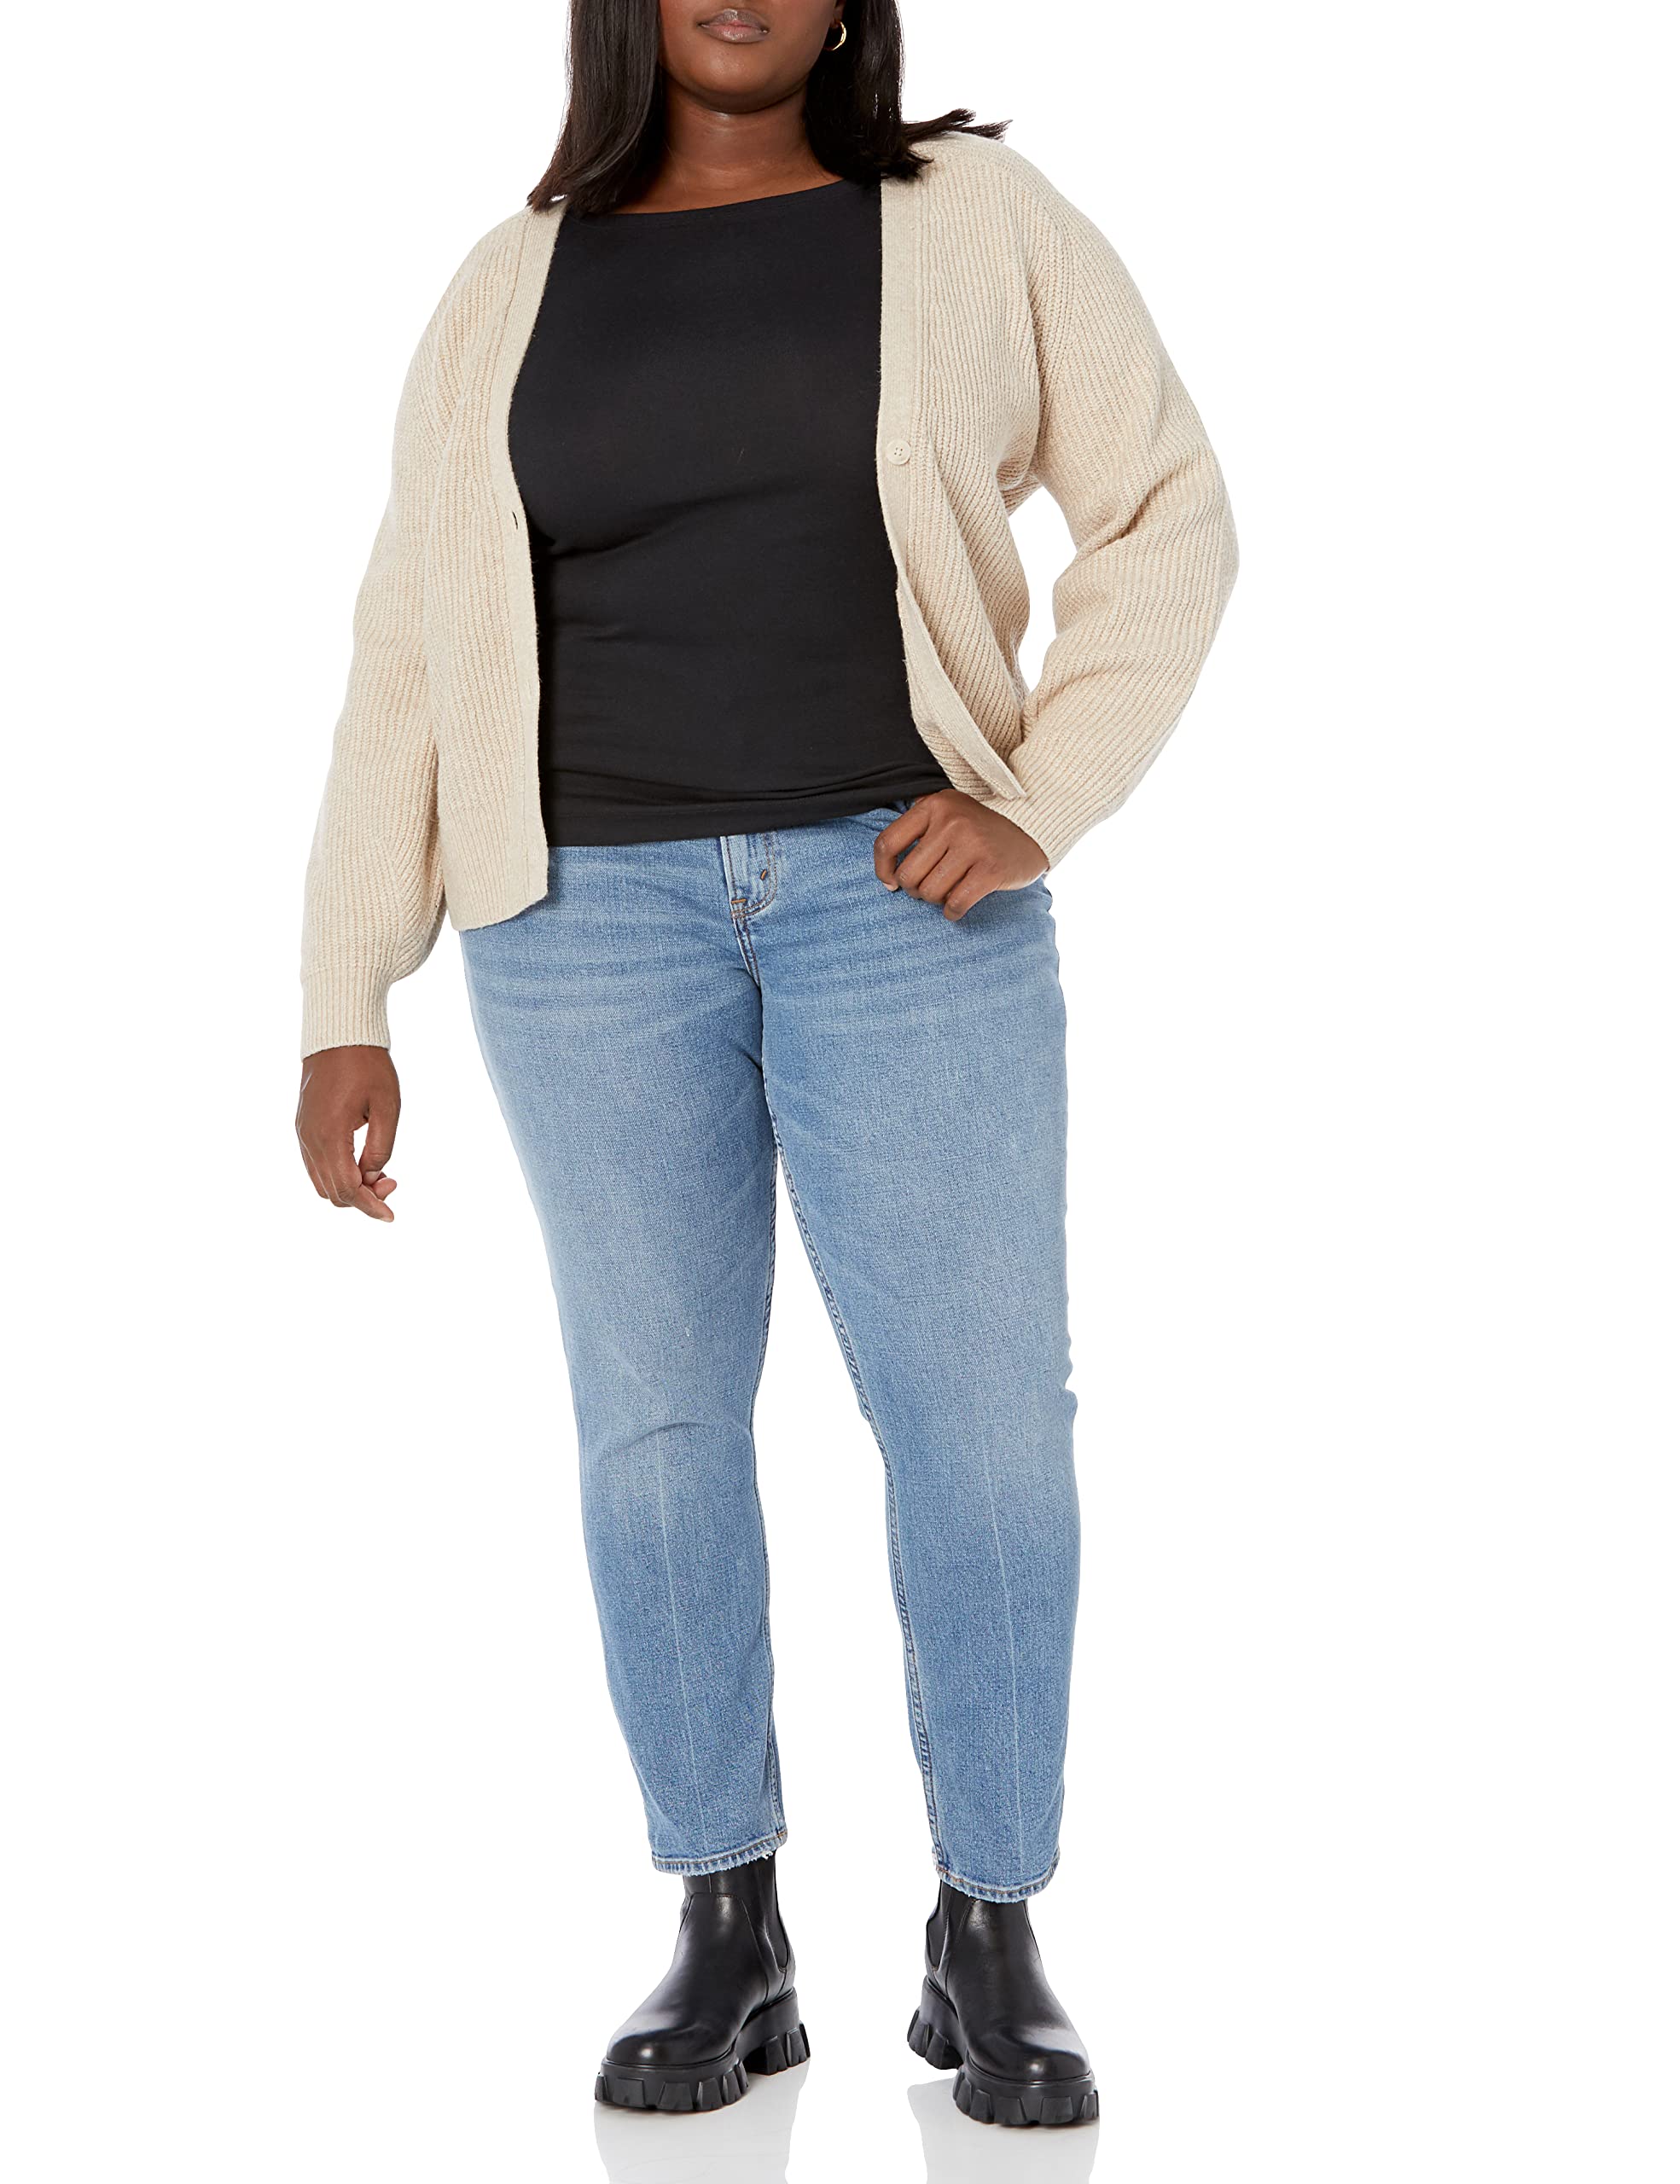 Amazon Essentials Women's Slim-Fit 3/4 Sleeve Solid Boat Neck T-Shirt